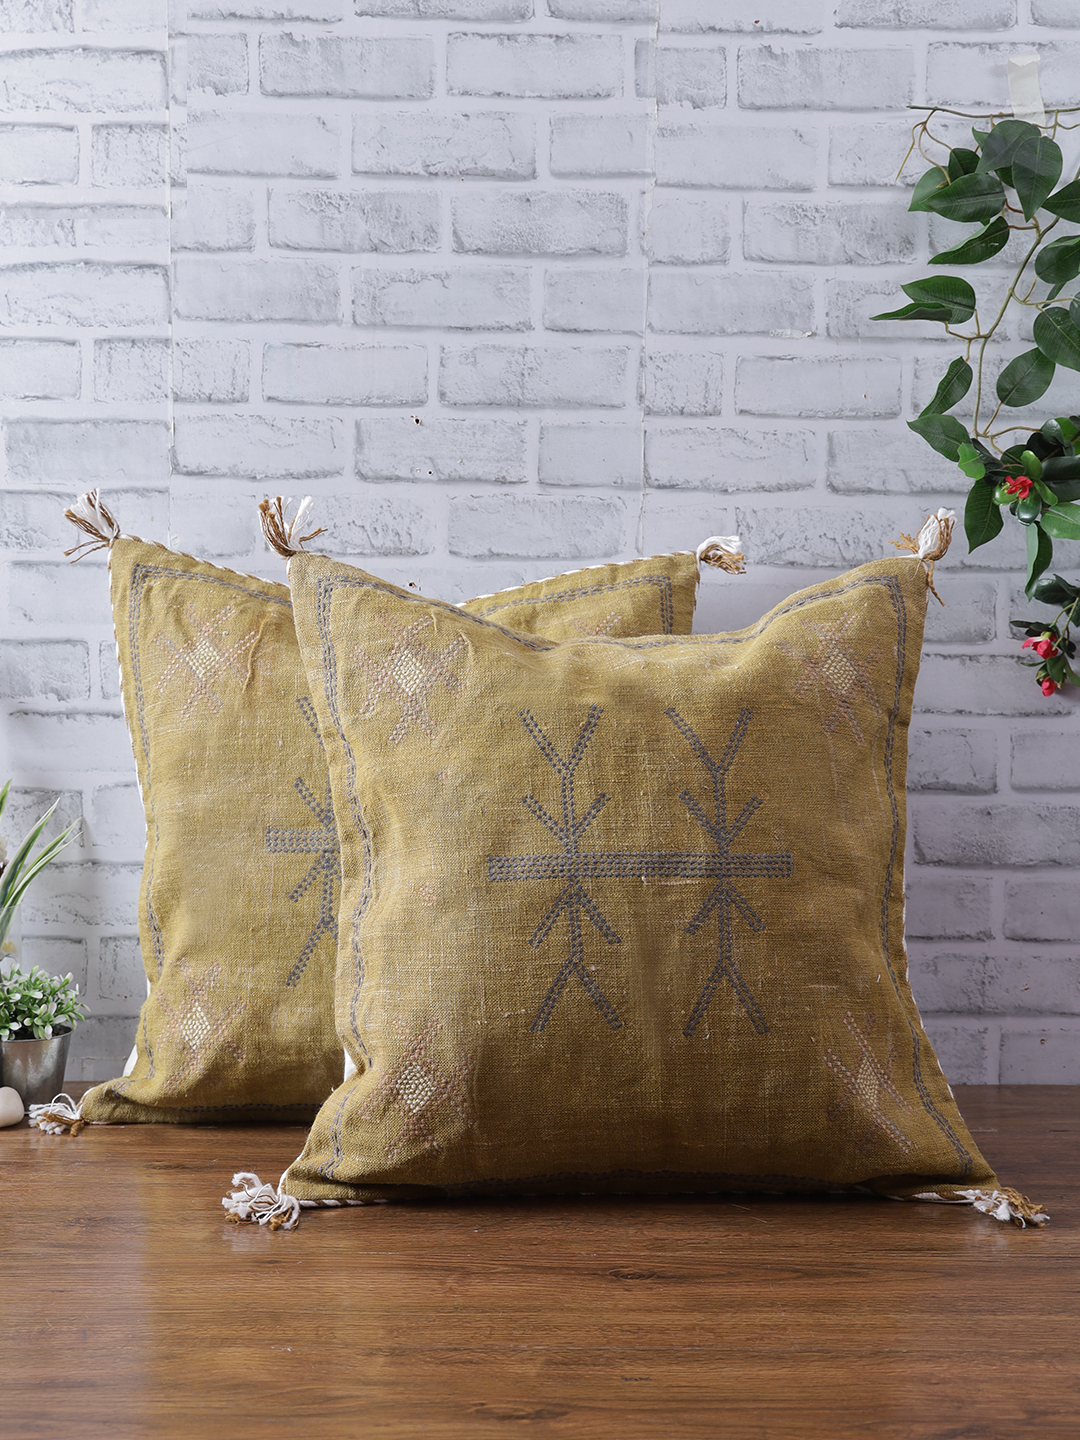 20x20 cactus silk inspired linen throw pillow covers